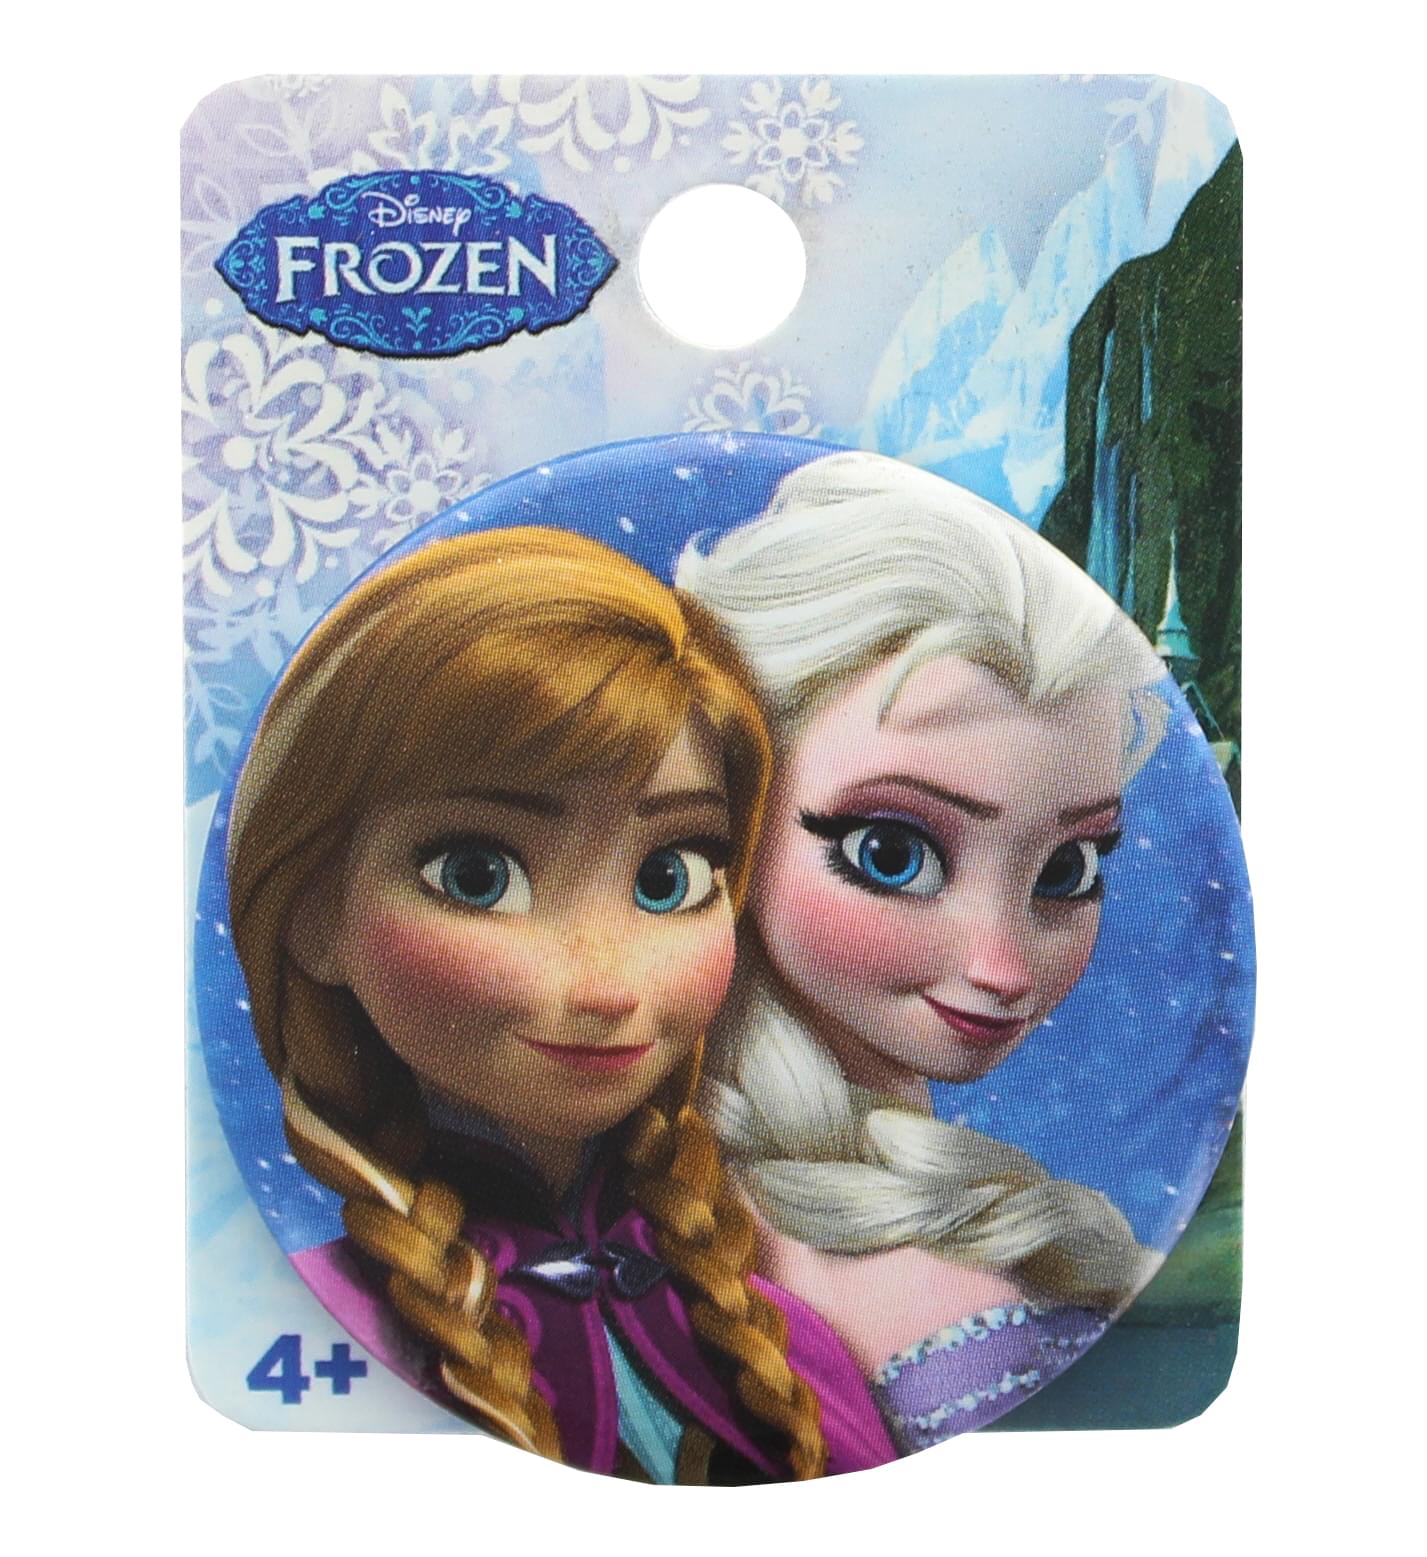 Disney's Frozen 1.5" Button: "Elsa & Anna"